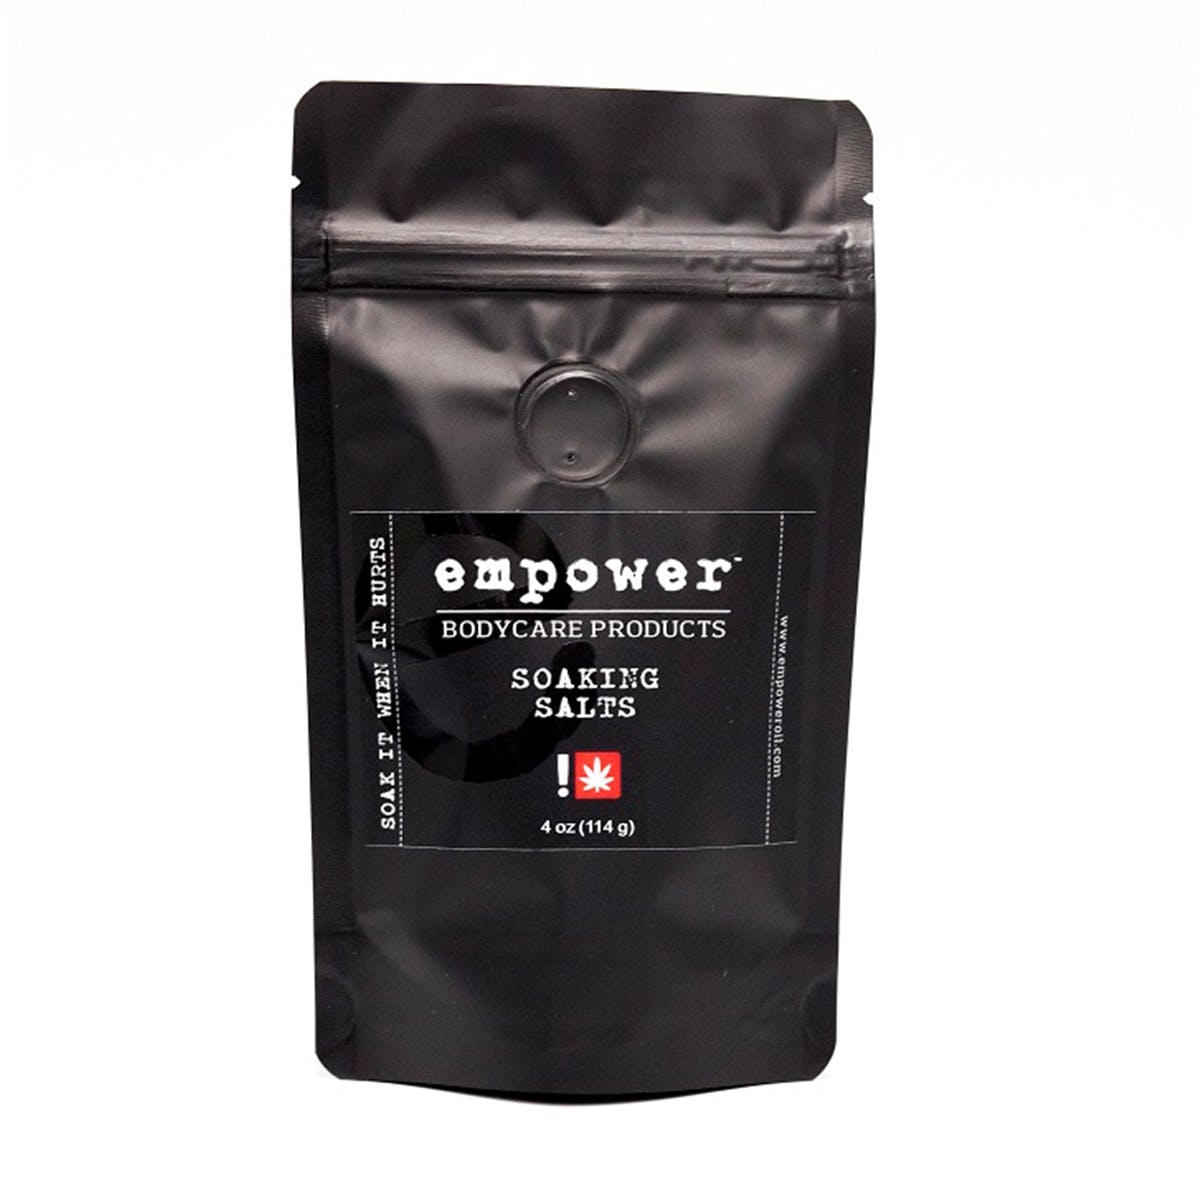 Empower® Soaking Salts - Black Label 4oz